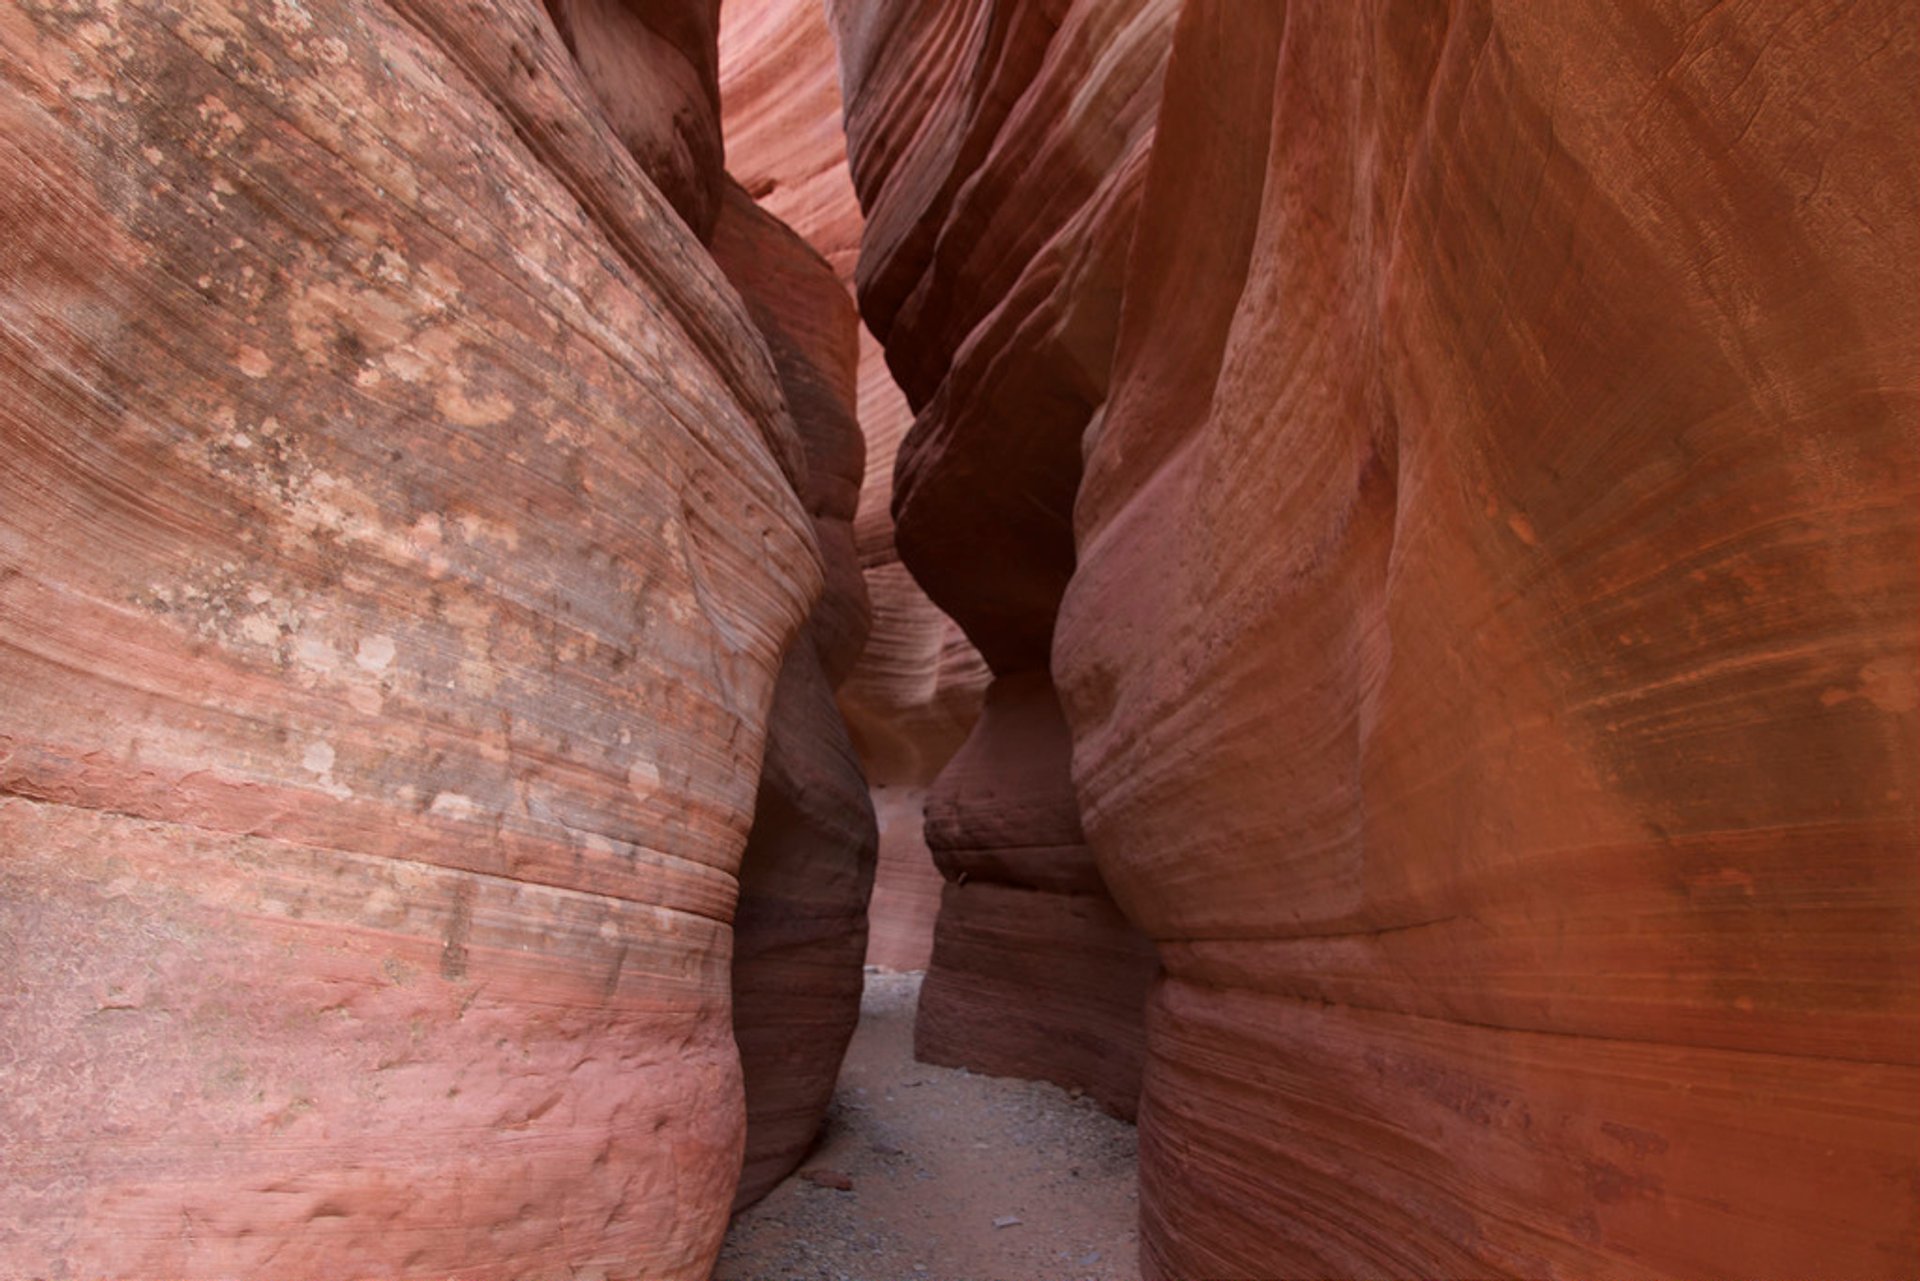 Red Canyon (canyon Peek-a-Boo)